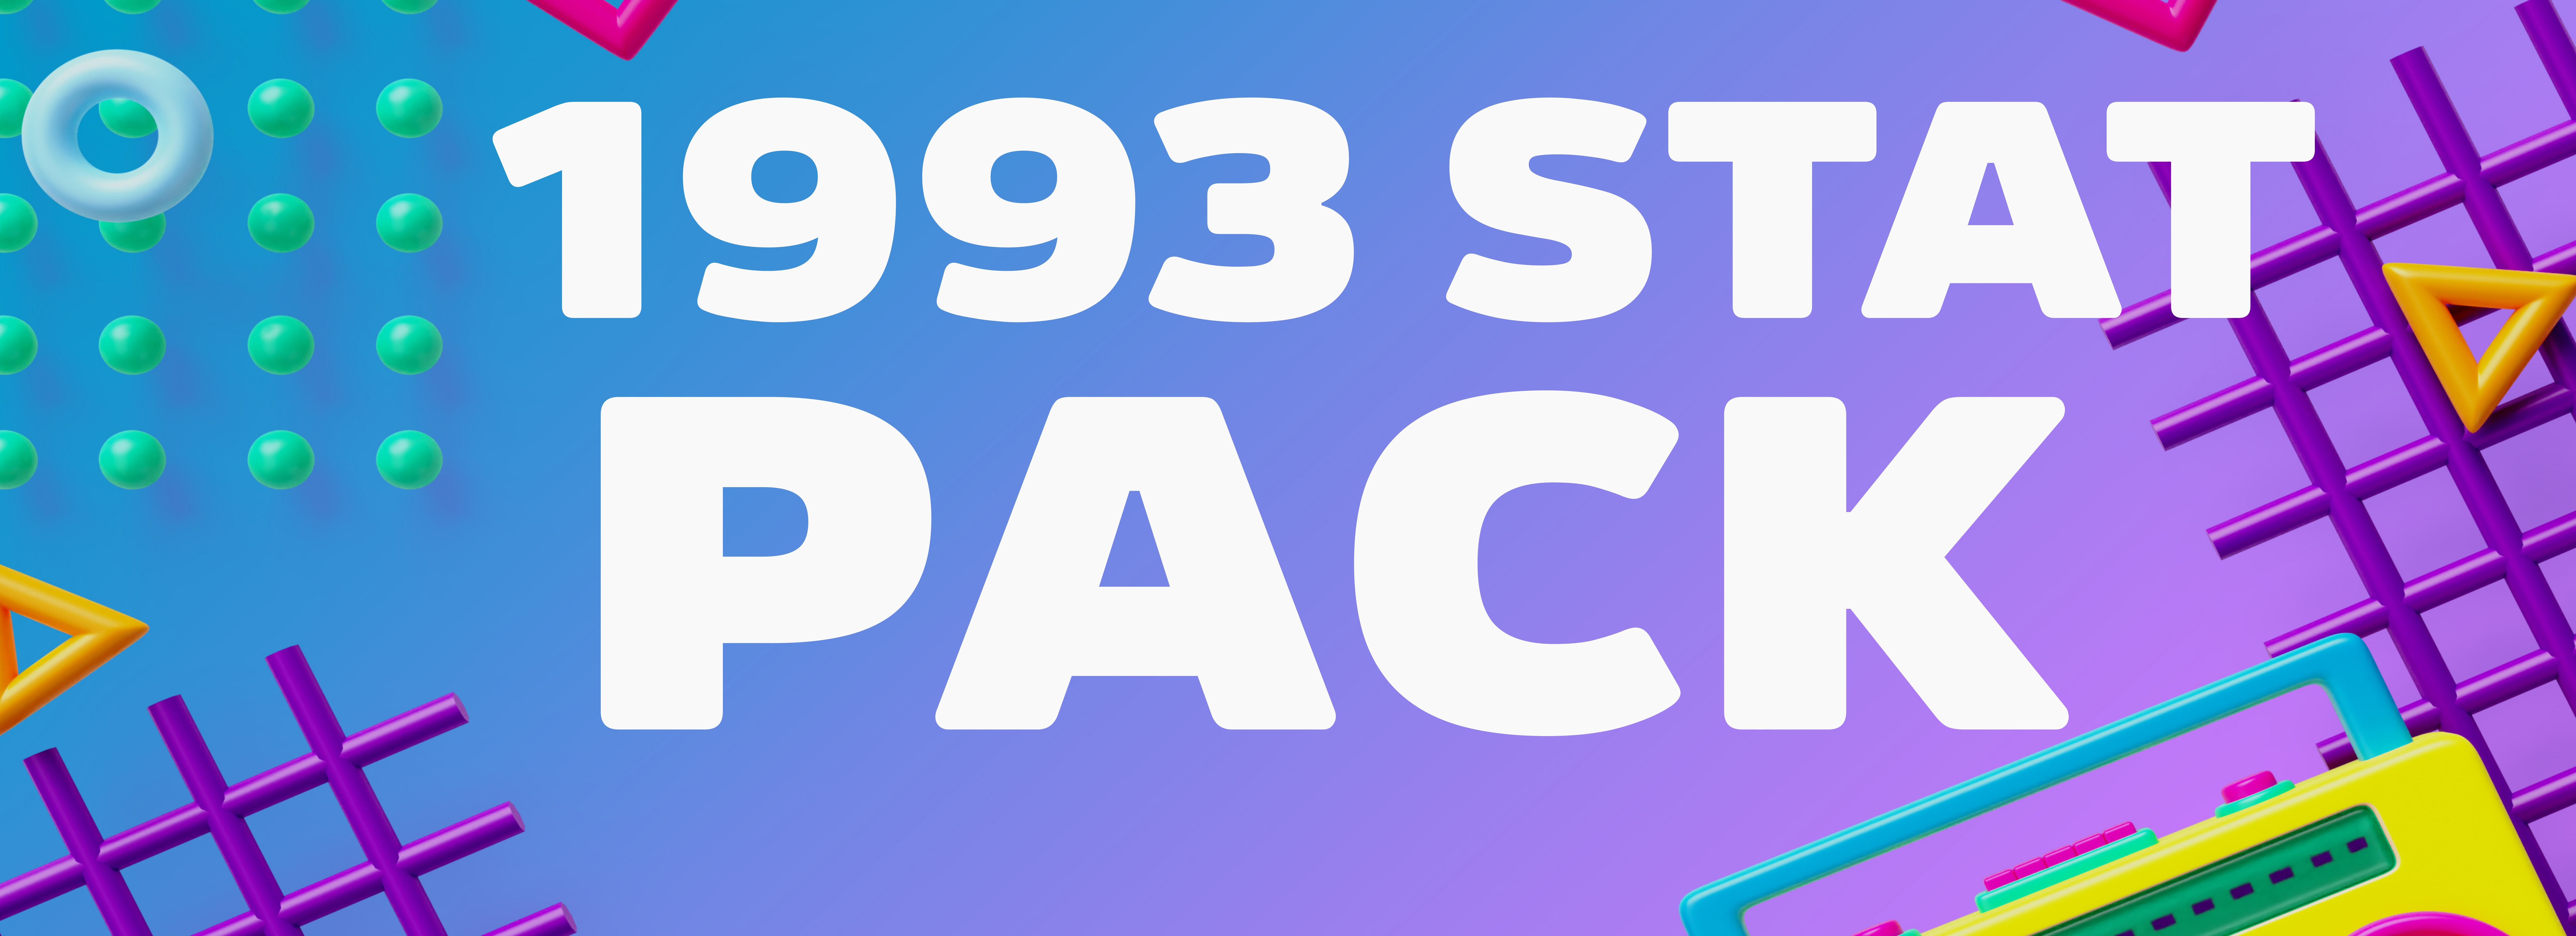 1993 Stat Pack